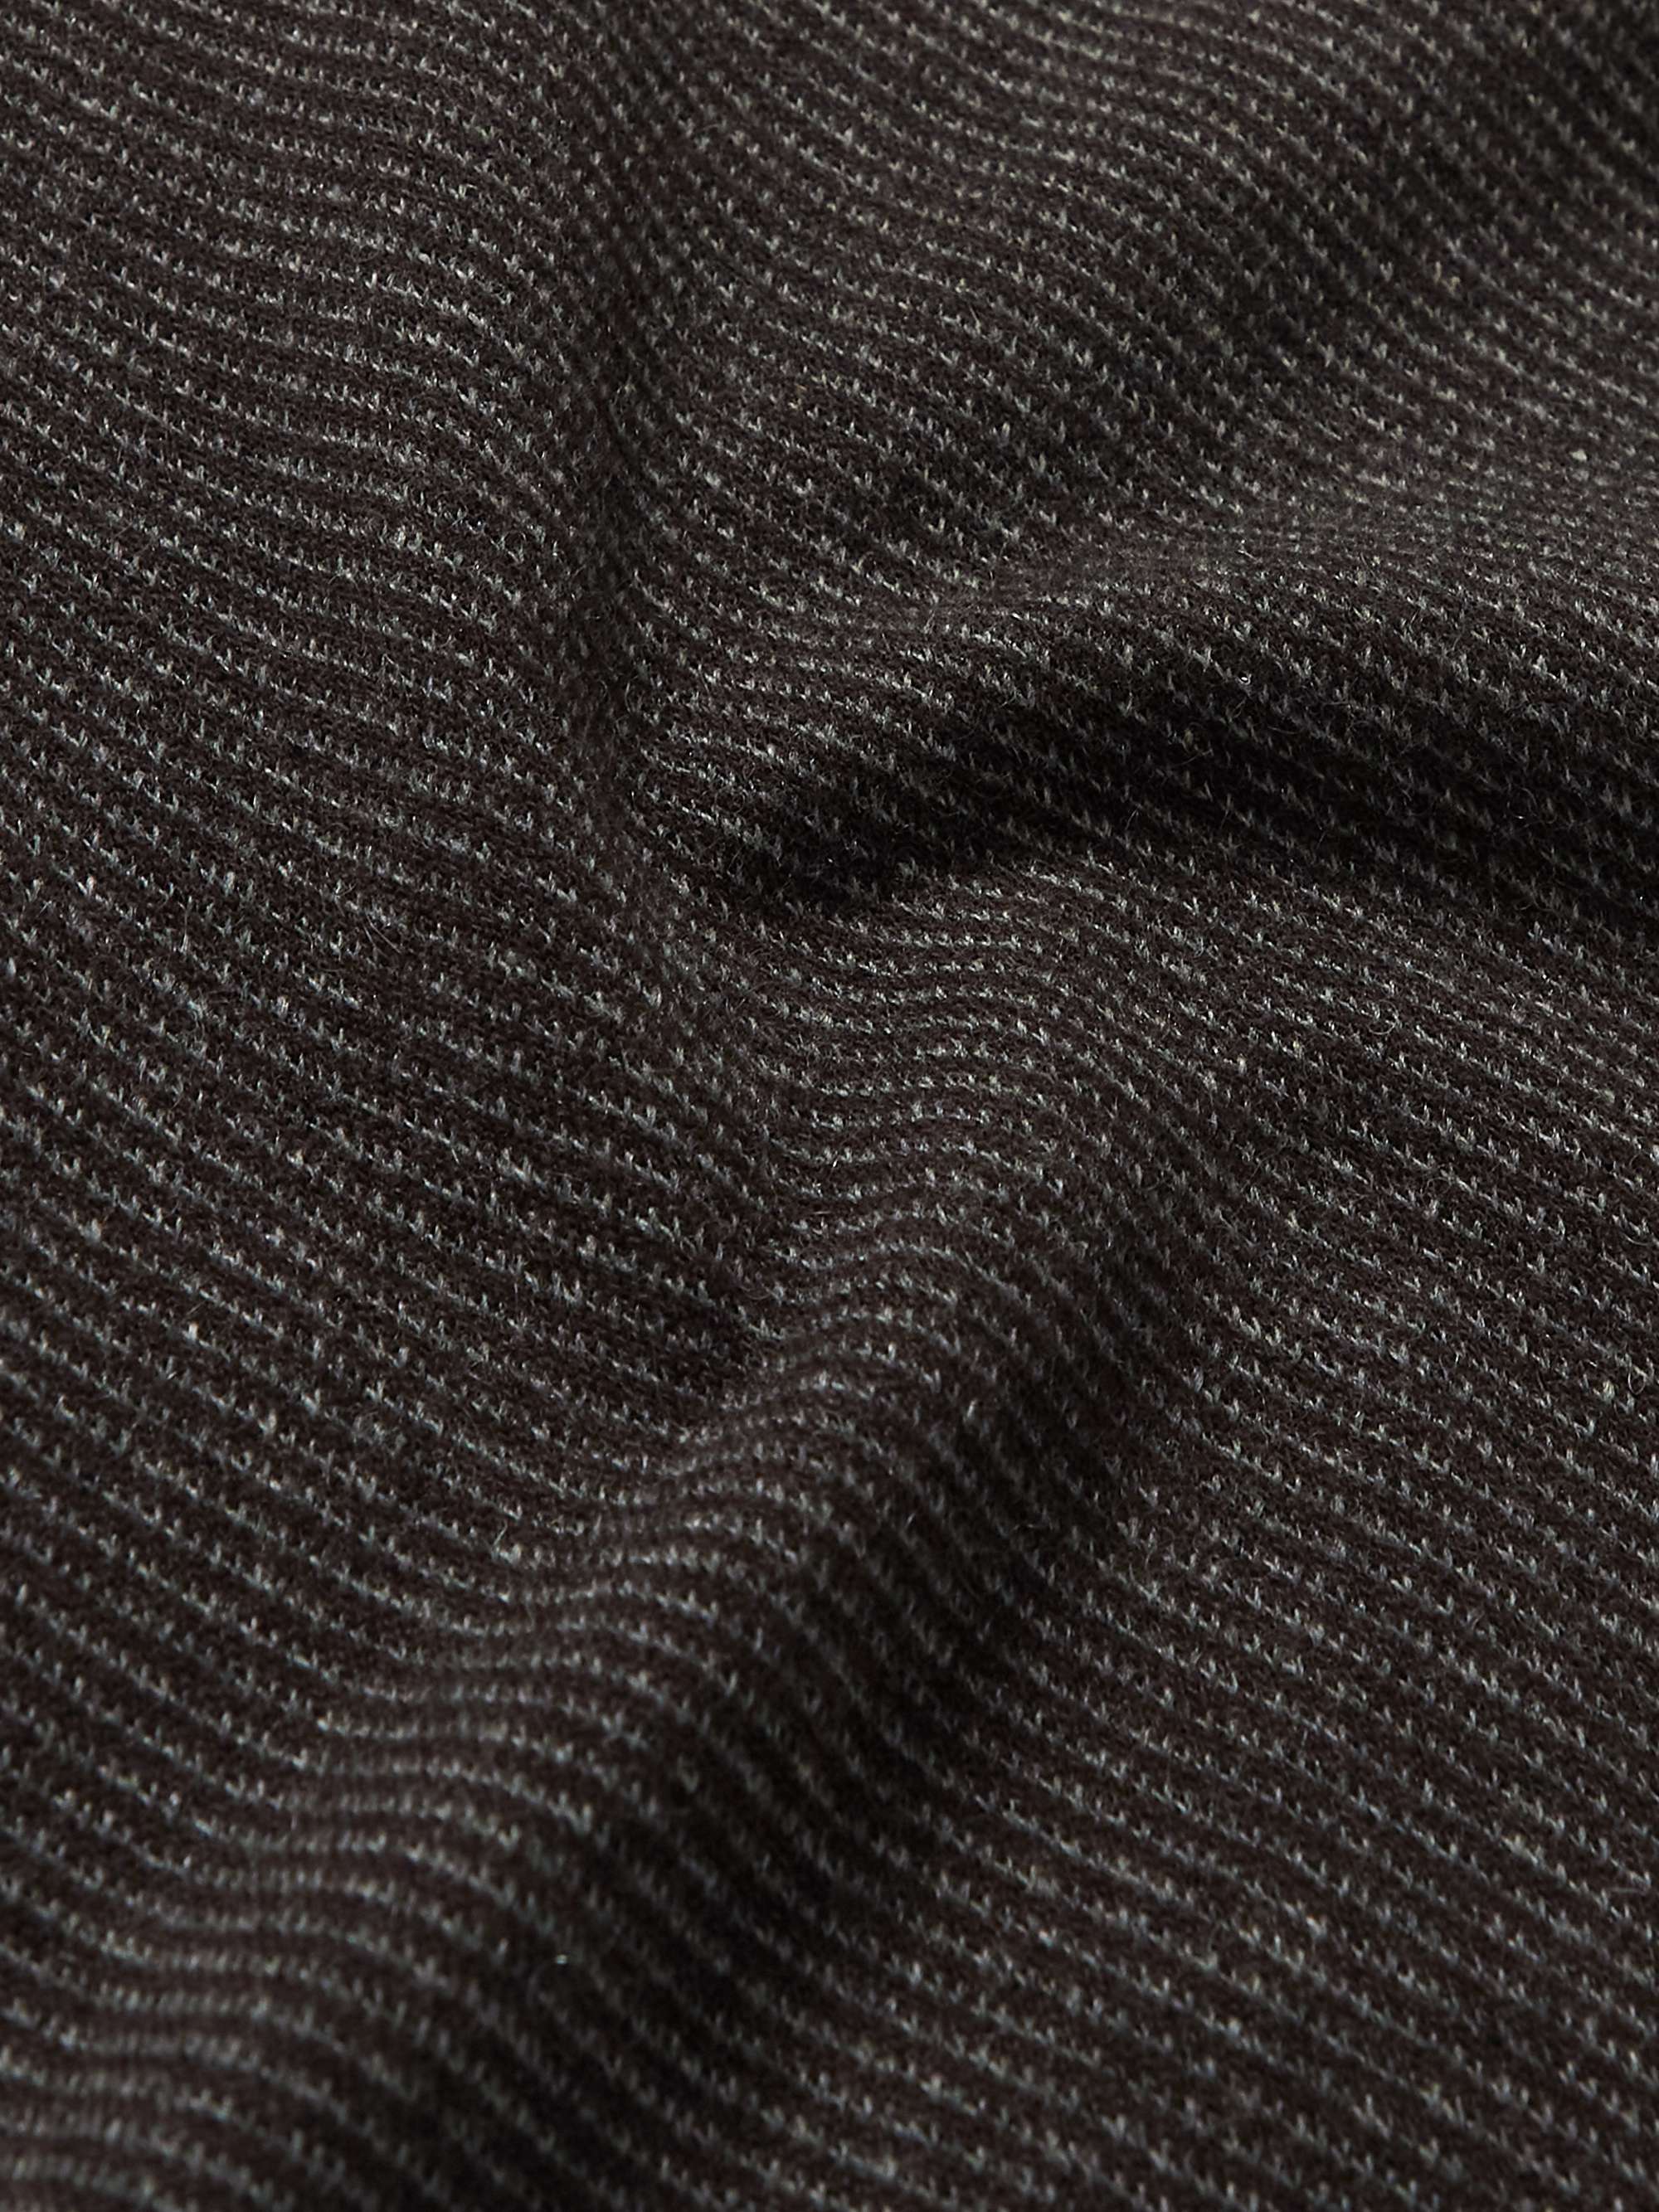 LORO PIANA Roadster Striped Cashmere Half-Zip Sweater